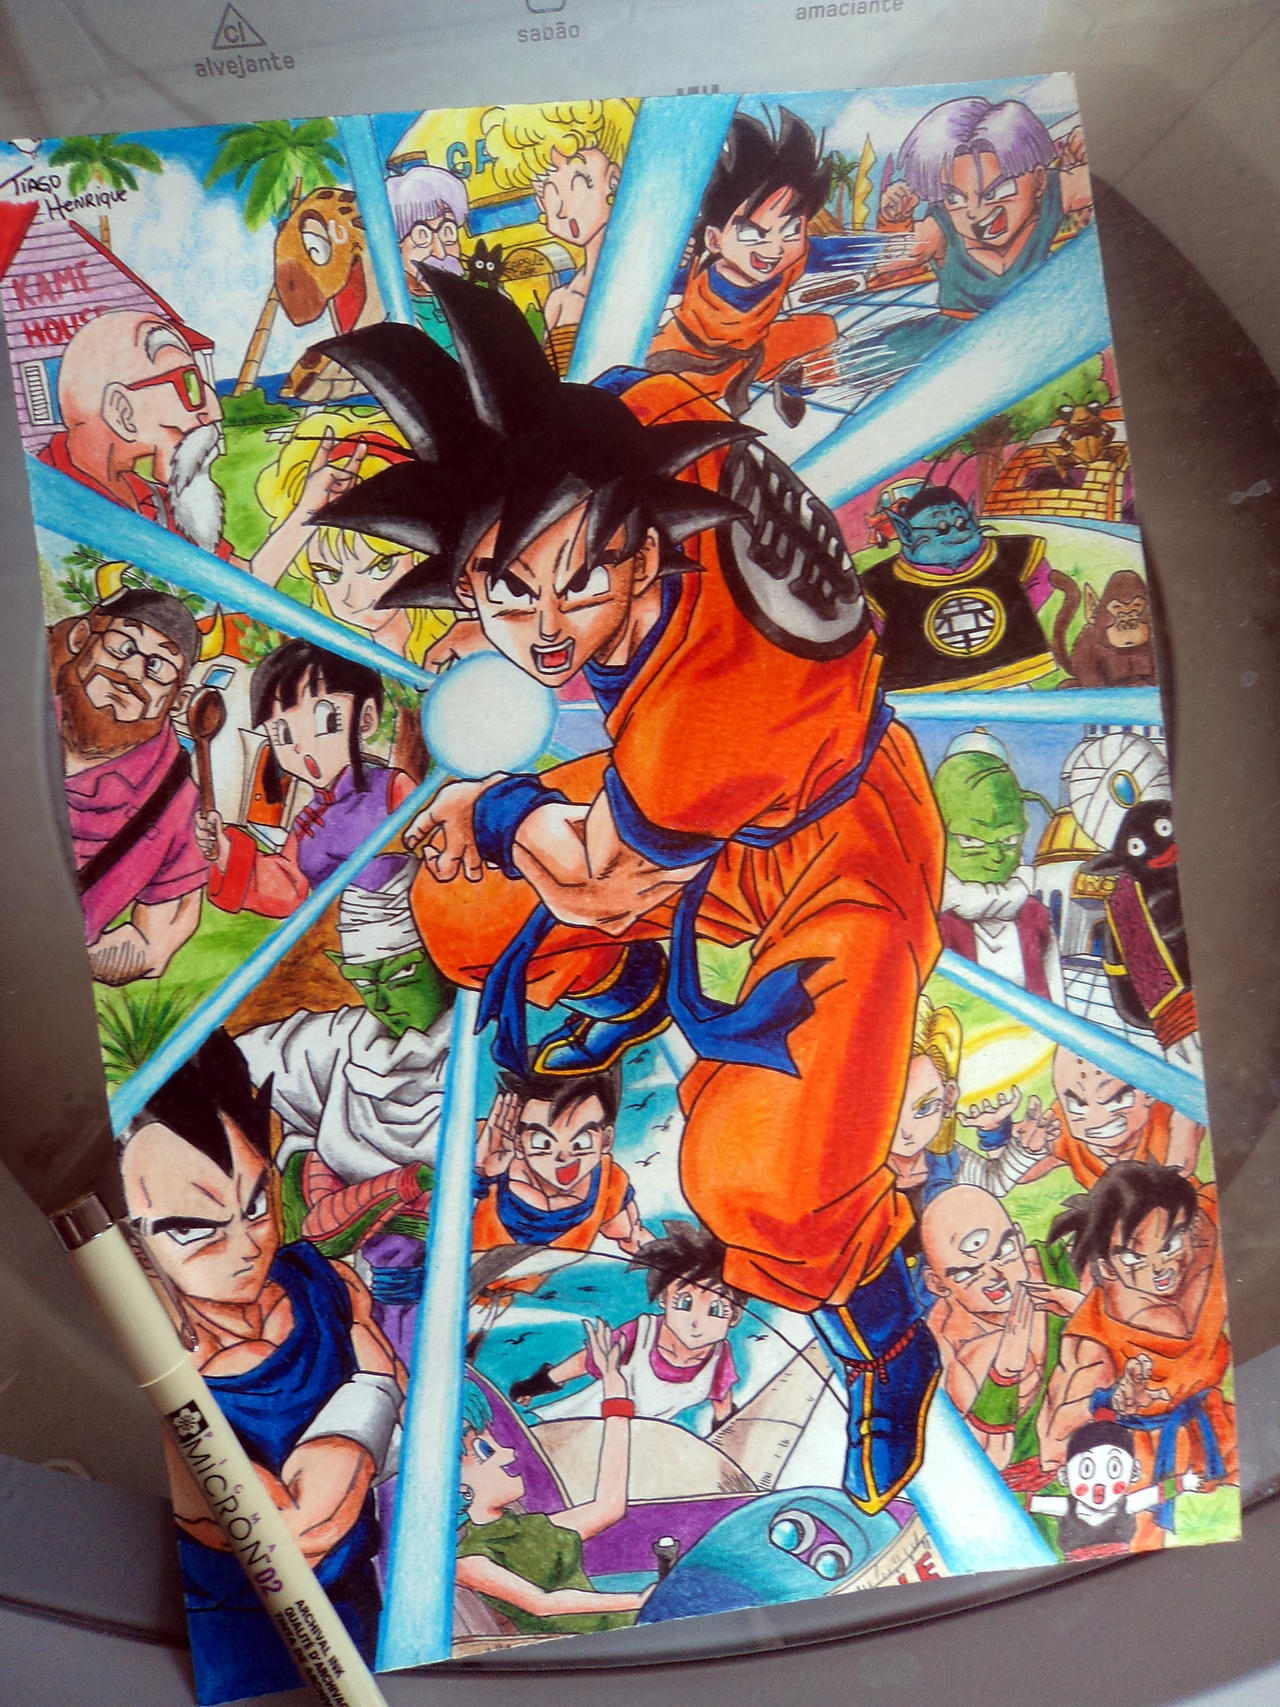 Goku Dragon Ball Z Anime Manga (25) by C4Dart on DeviantArt